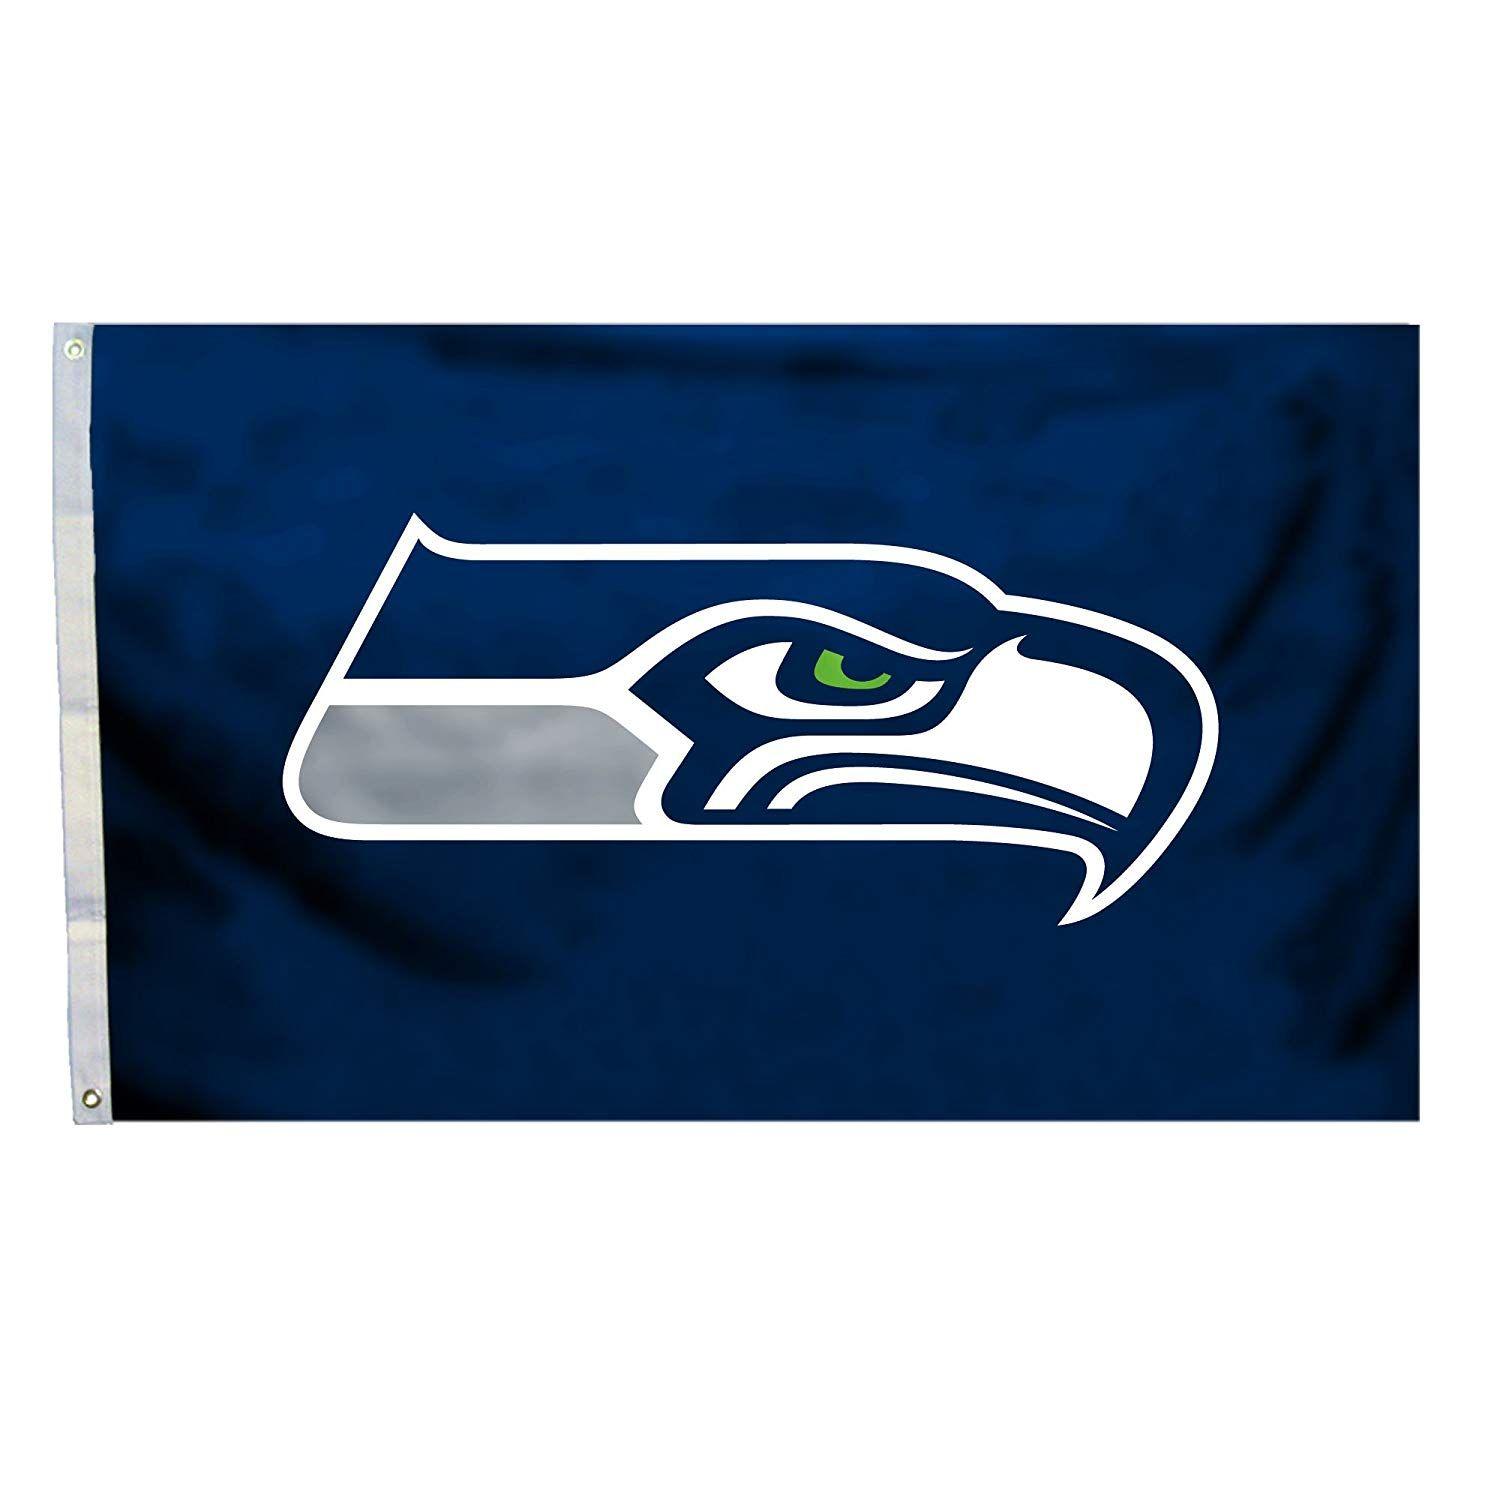 NFL Seahawks Logo - Amazon.com : NFL SEAHAWKS LOGO 3X5 FLAG : Outdoor Flags : Sports ...